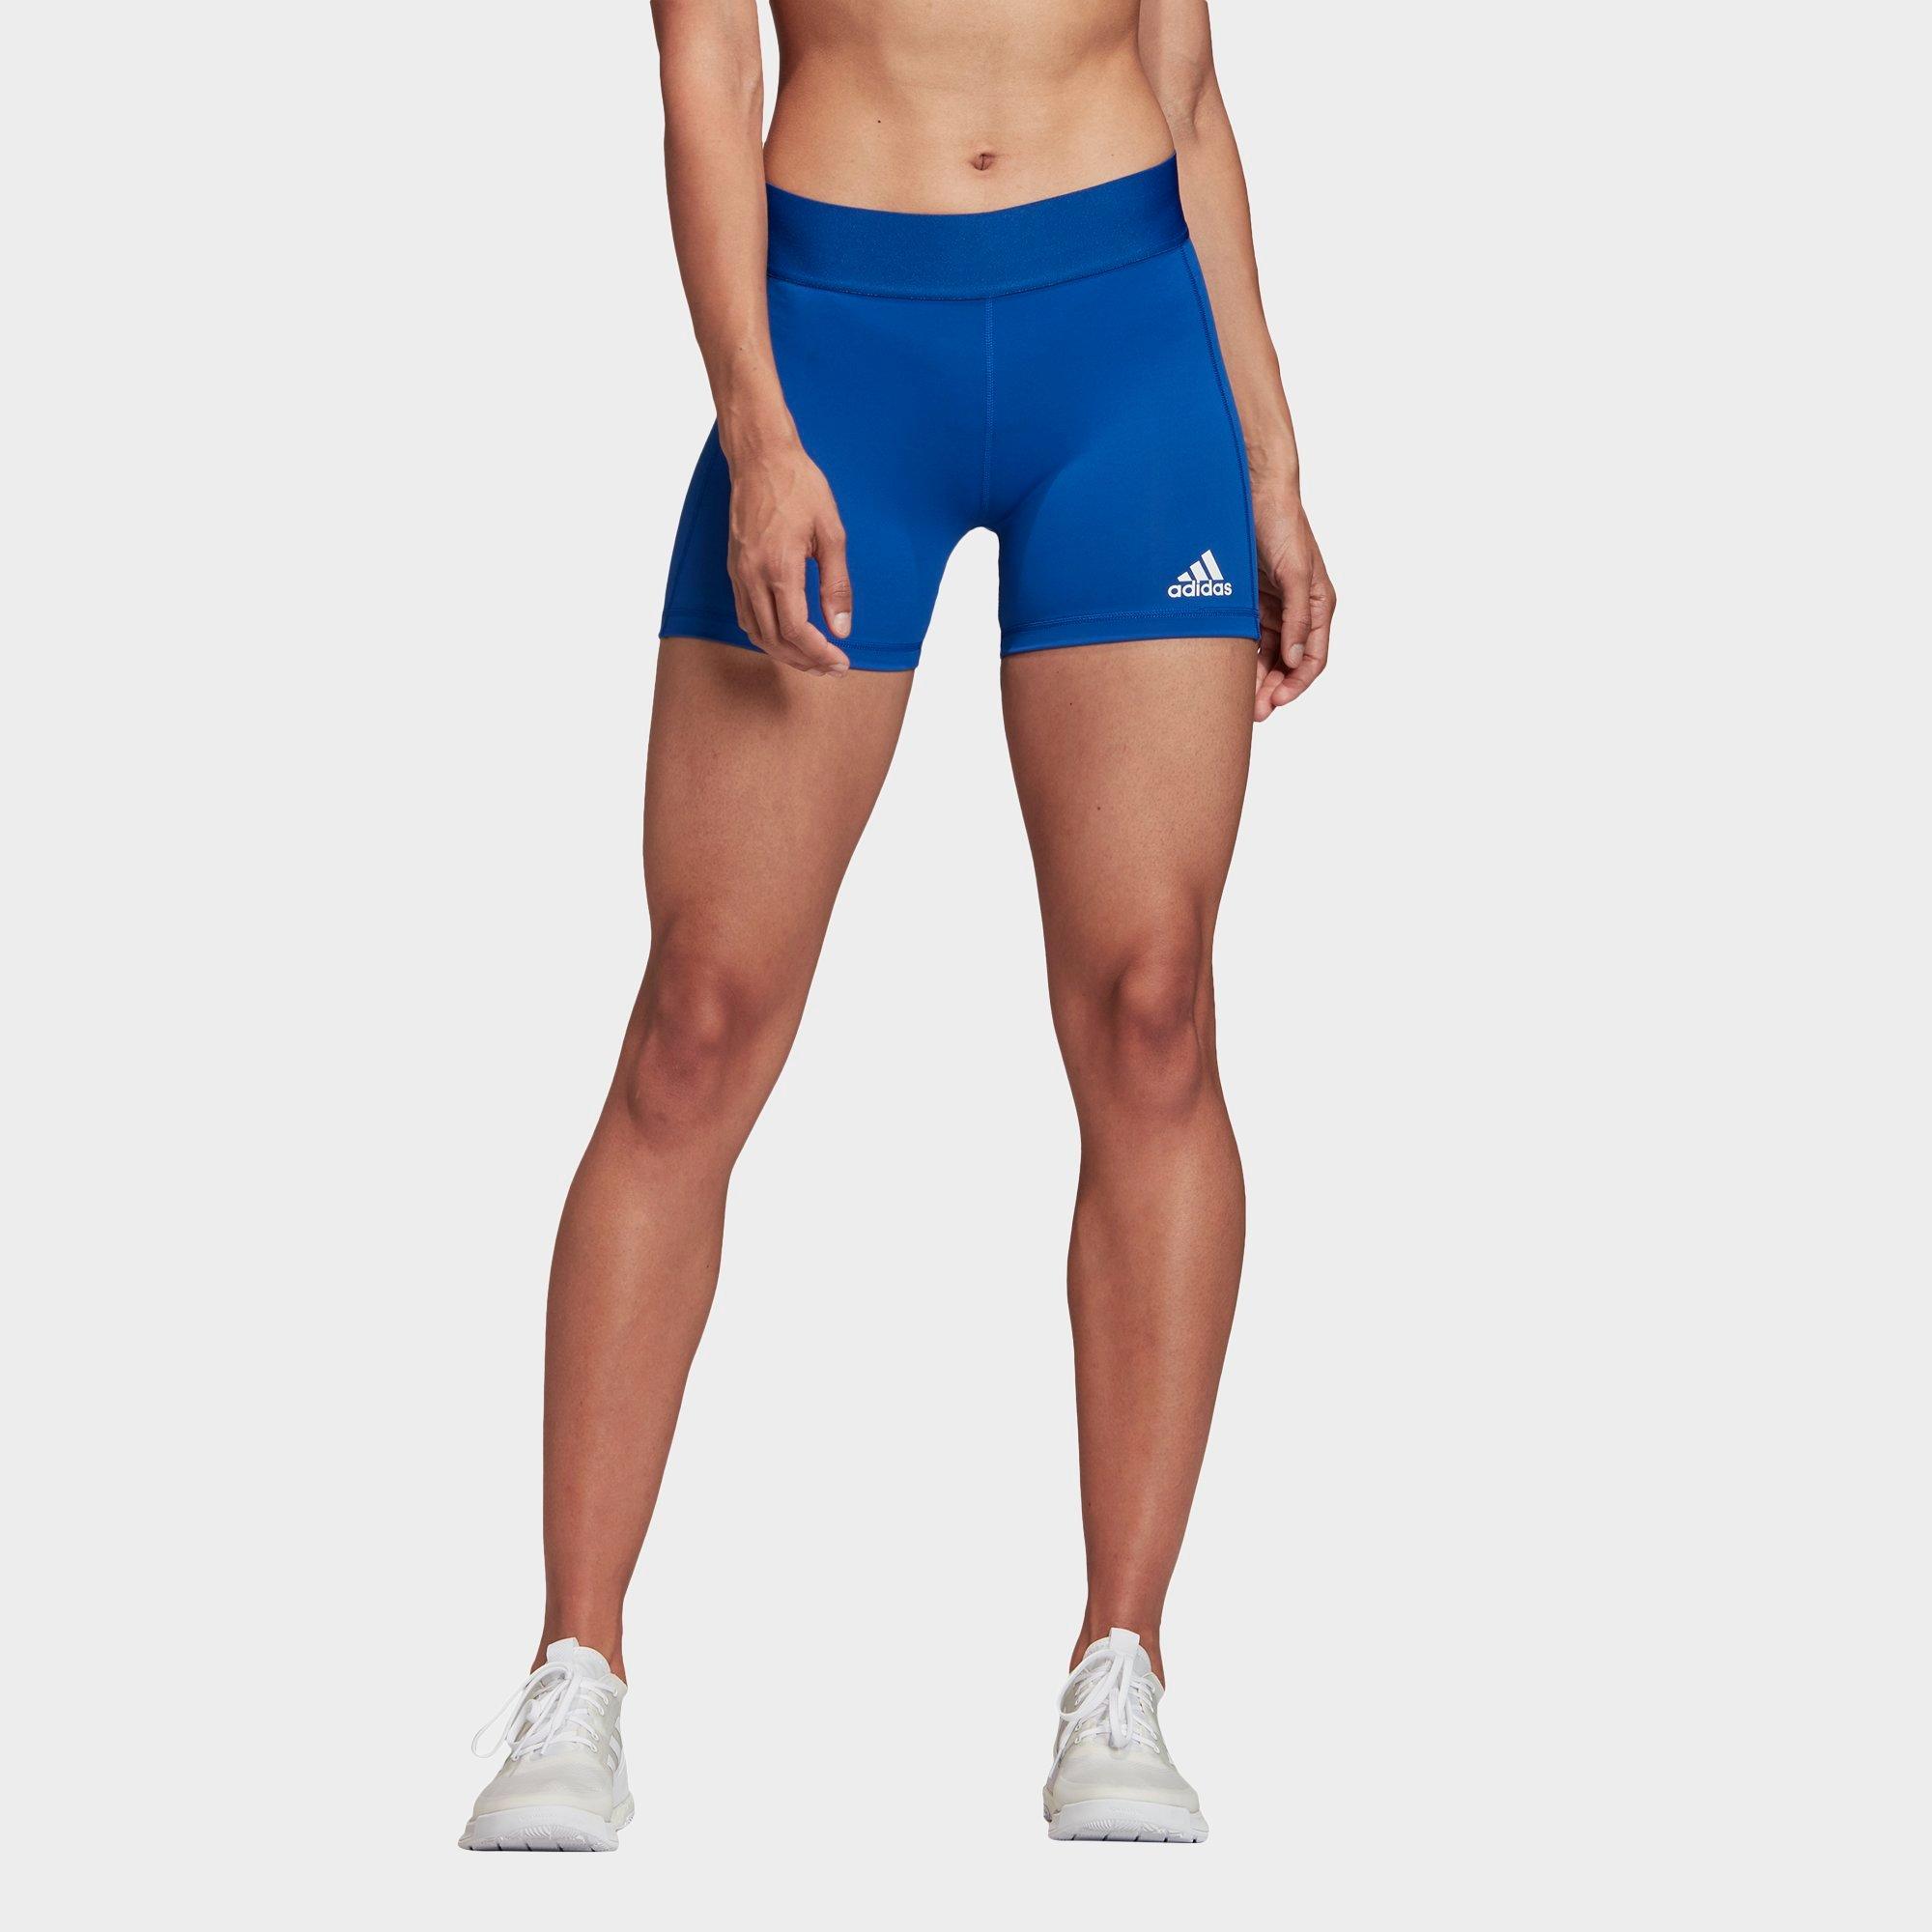 adidas compression shorts women's